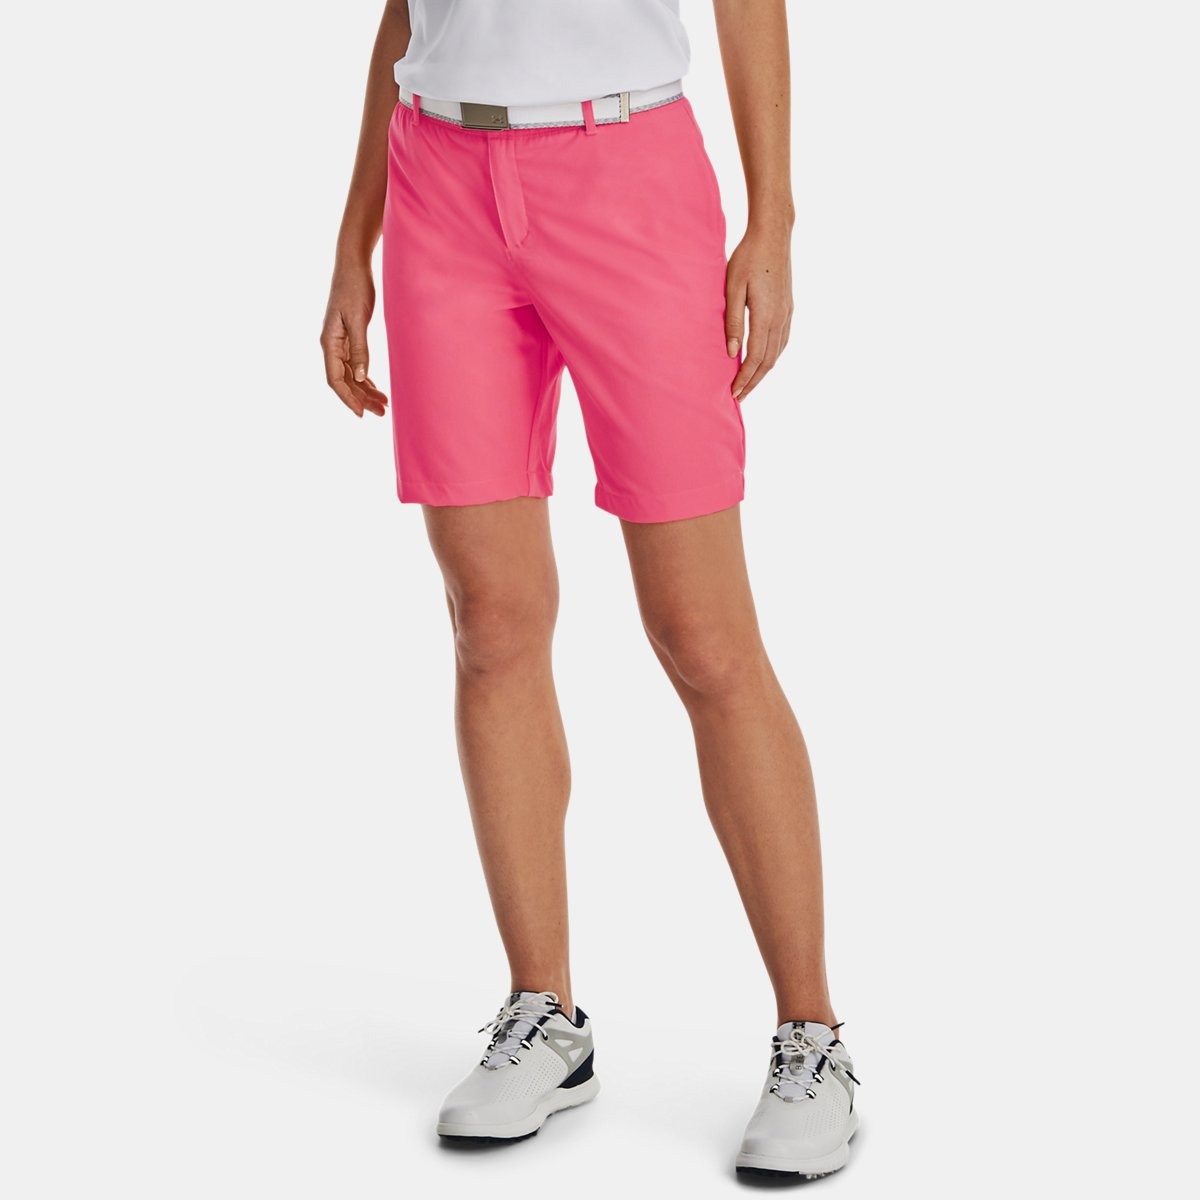 Shorts - Pink - Woman - Under Armour GOOFASH